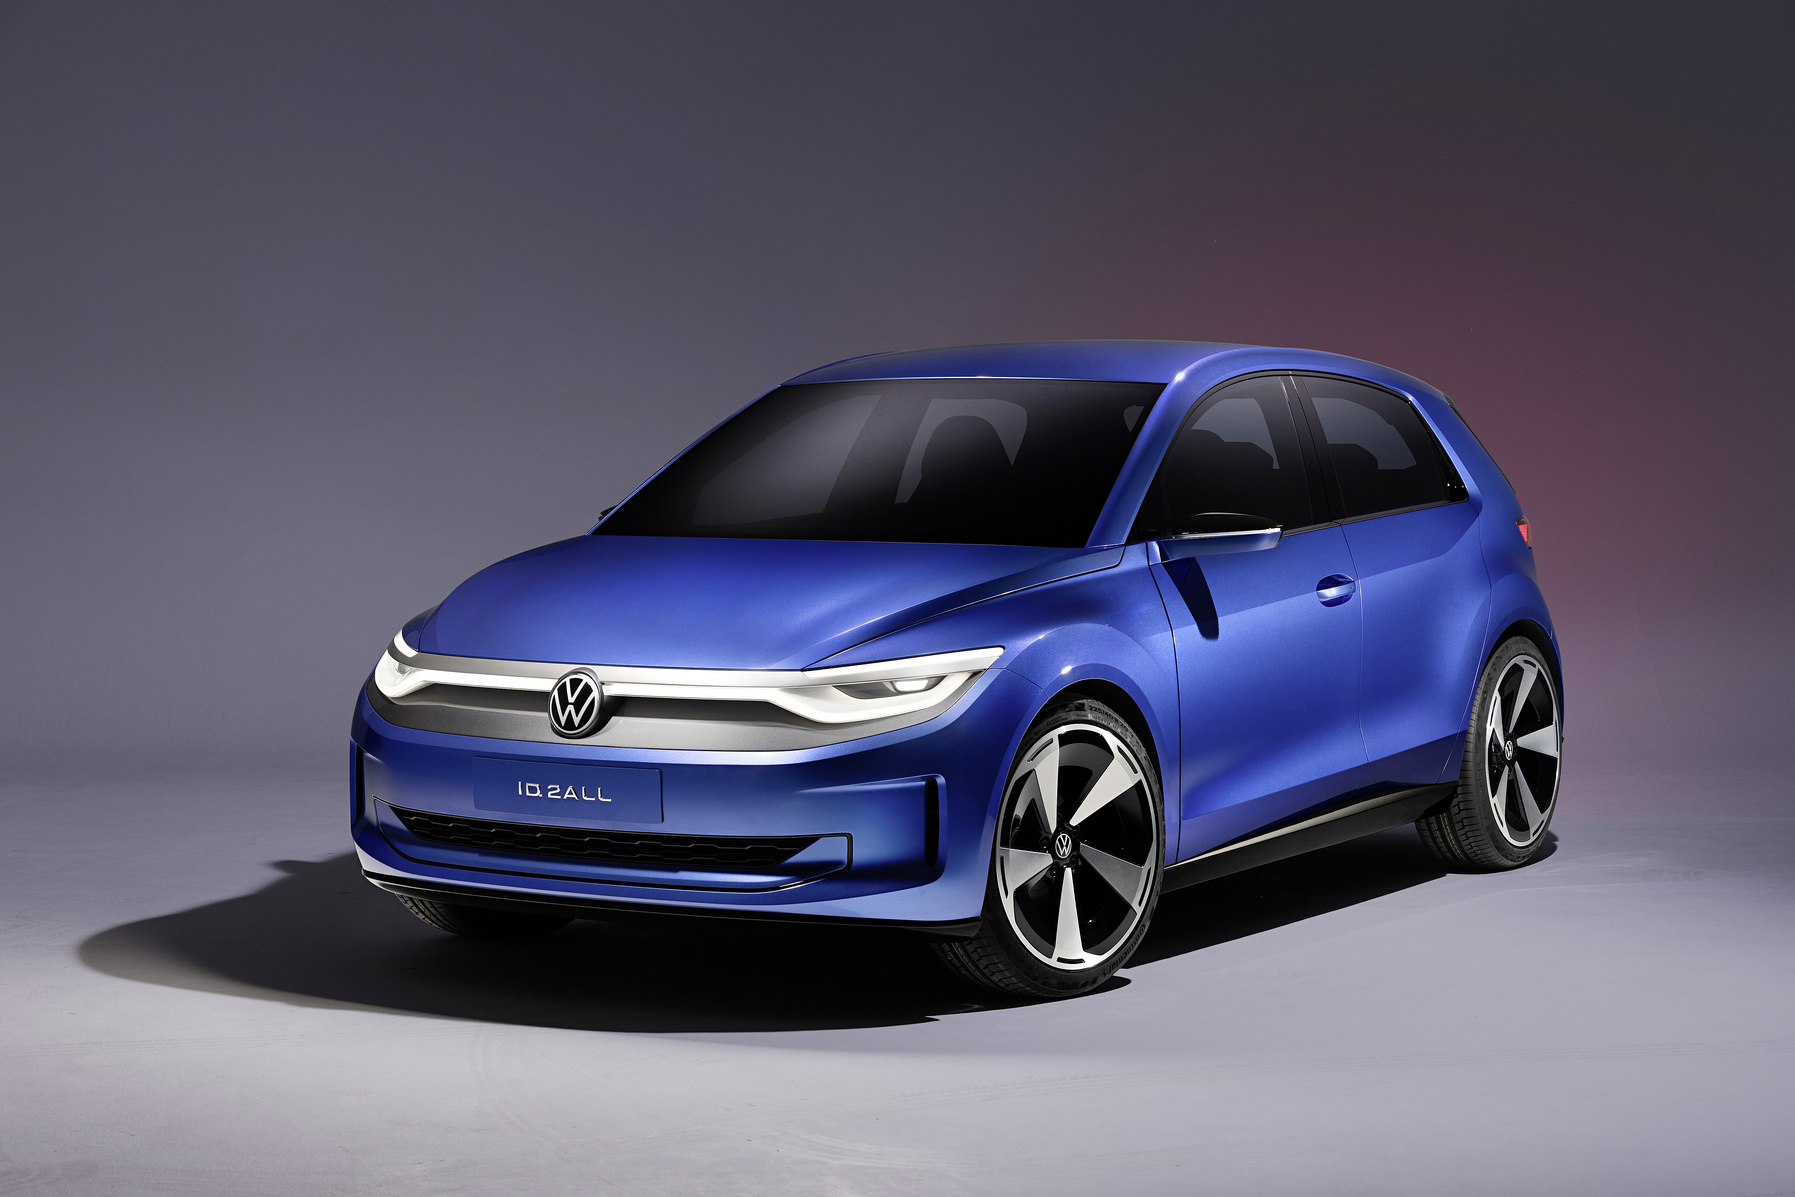 Volkswagen: Με το ID. 2all κάνει πιο προσιτή την ηλεκτροκίνηση